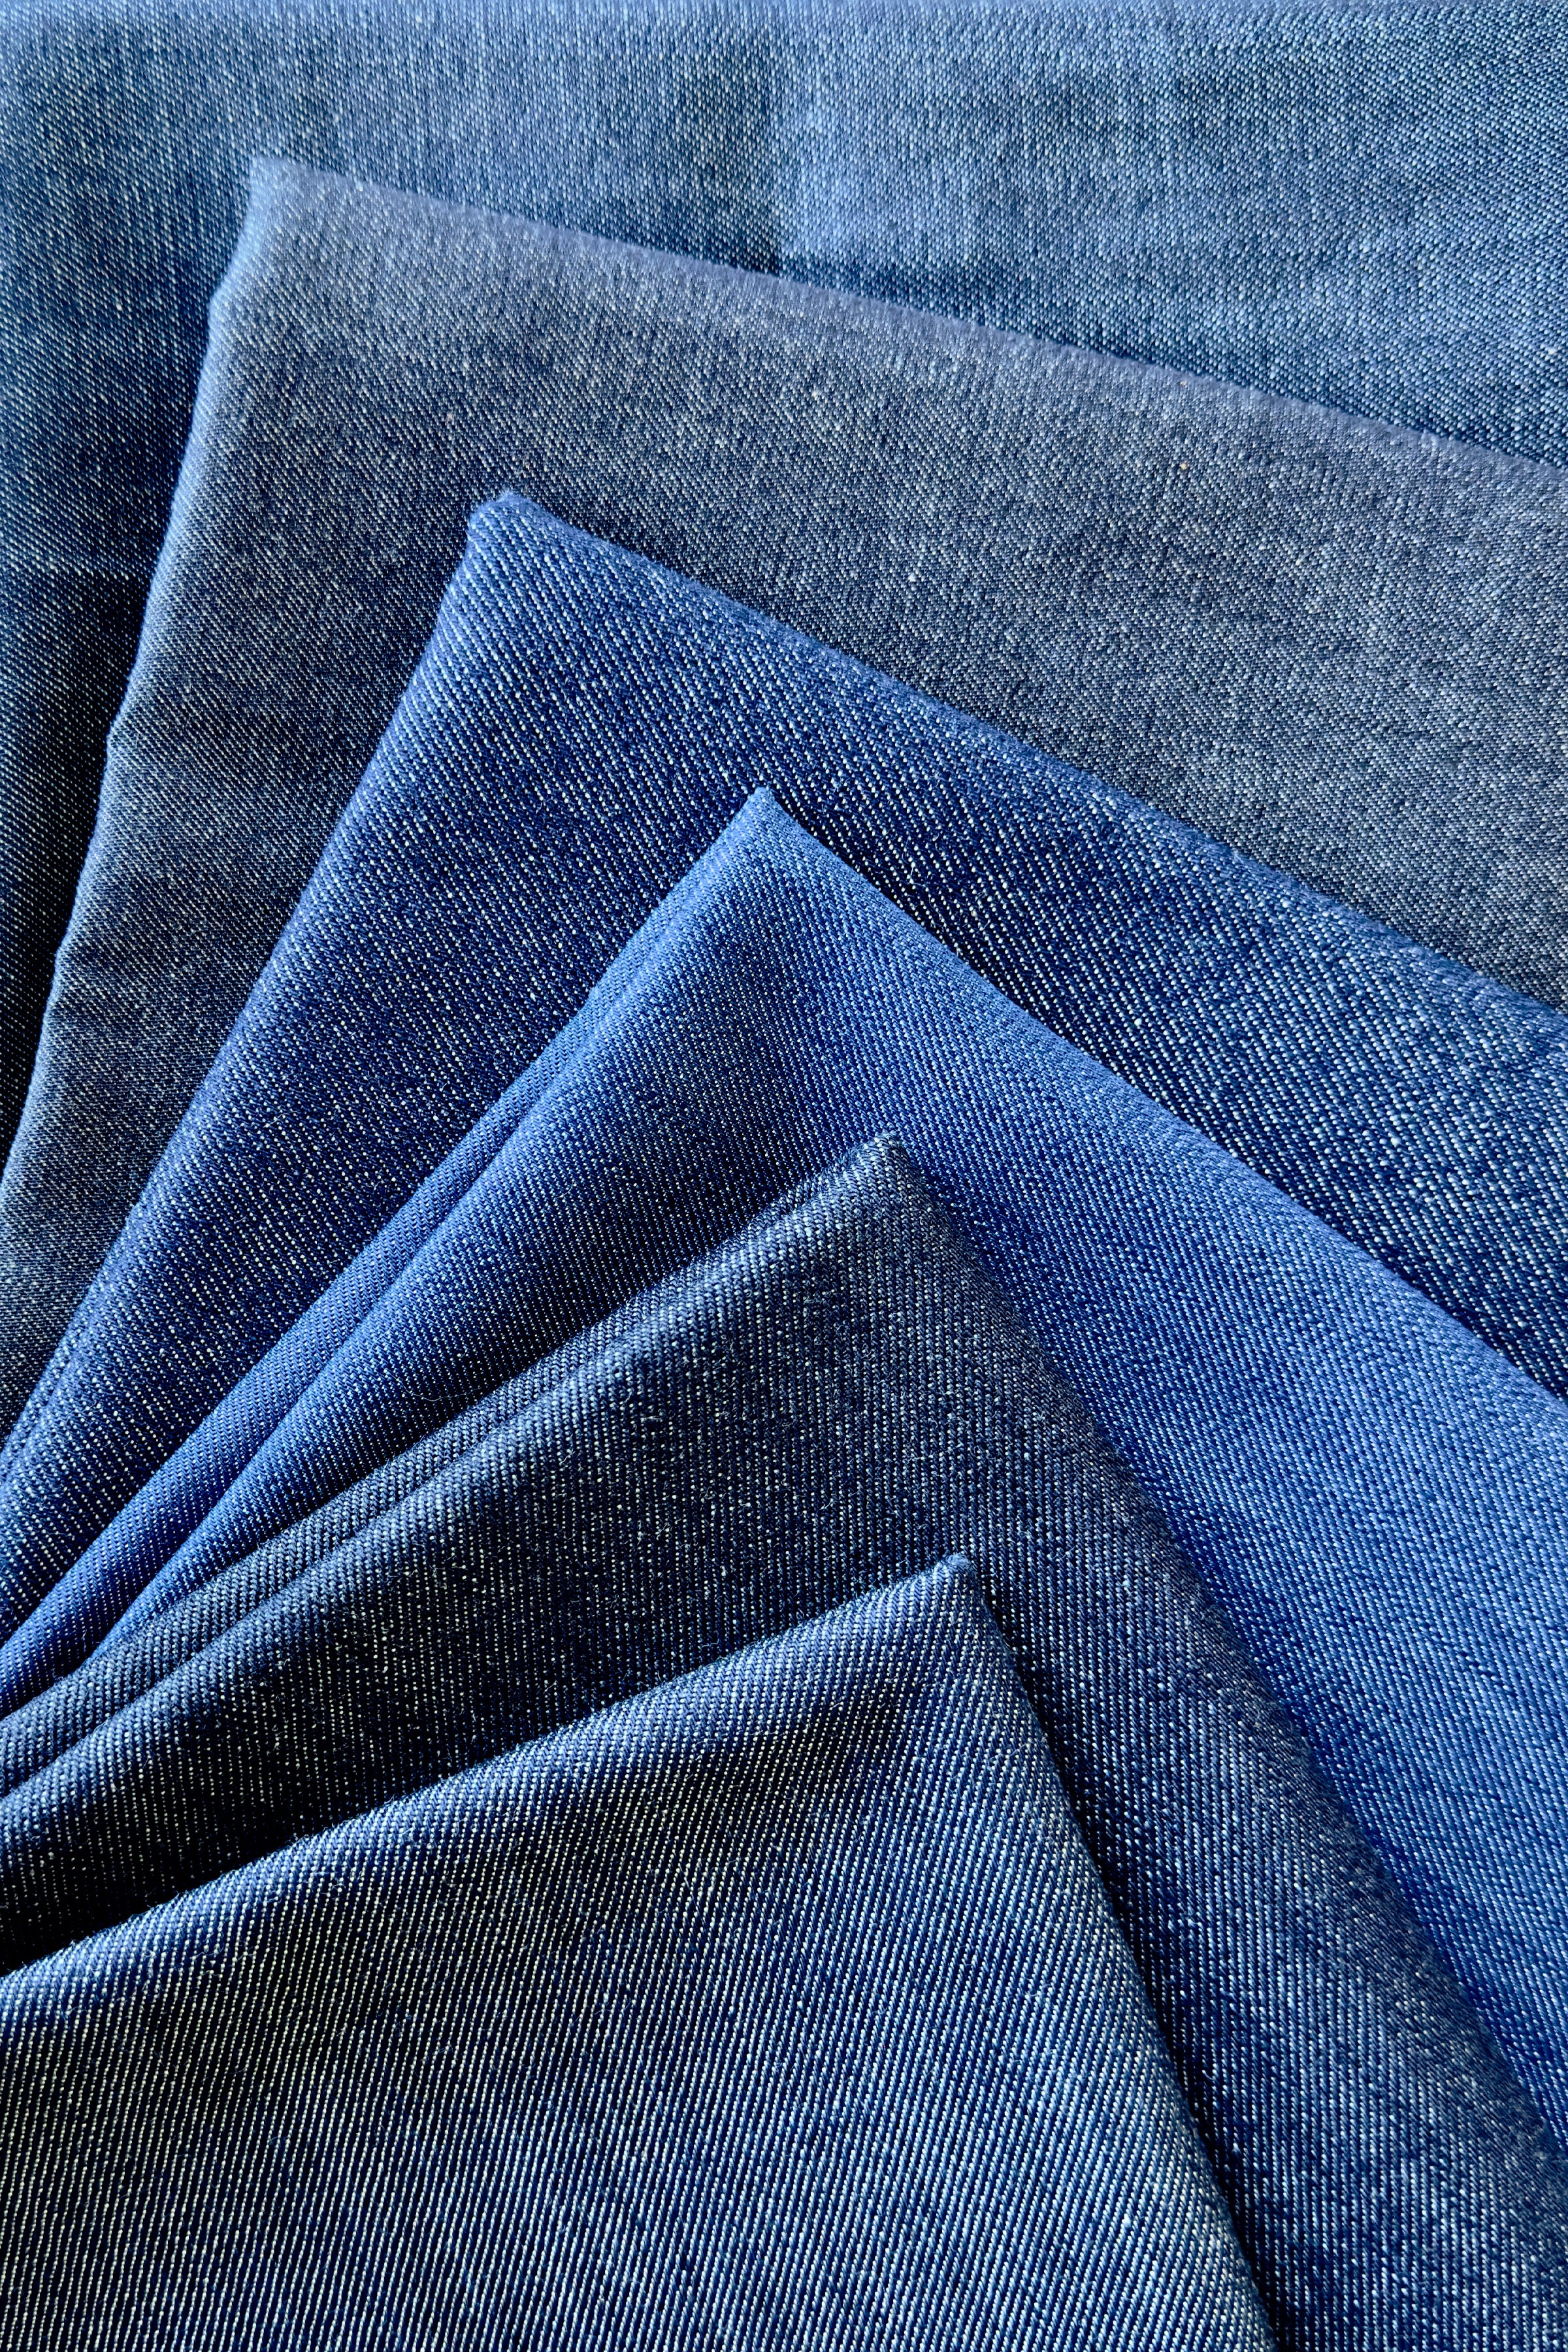 Branded Surplus Men's Slim Fit Stretchable Denim Jean Greenish Blue Jeans |  eBay